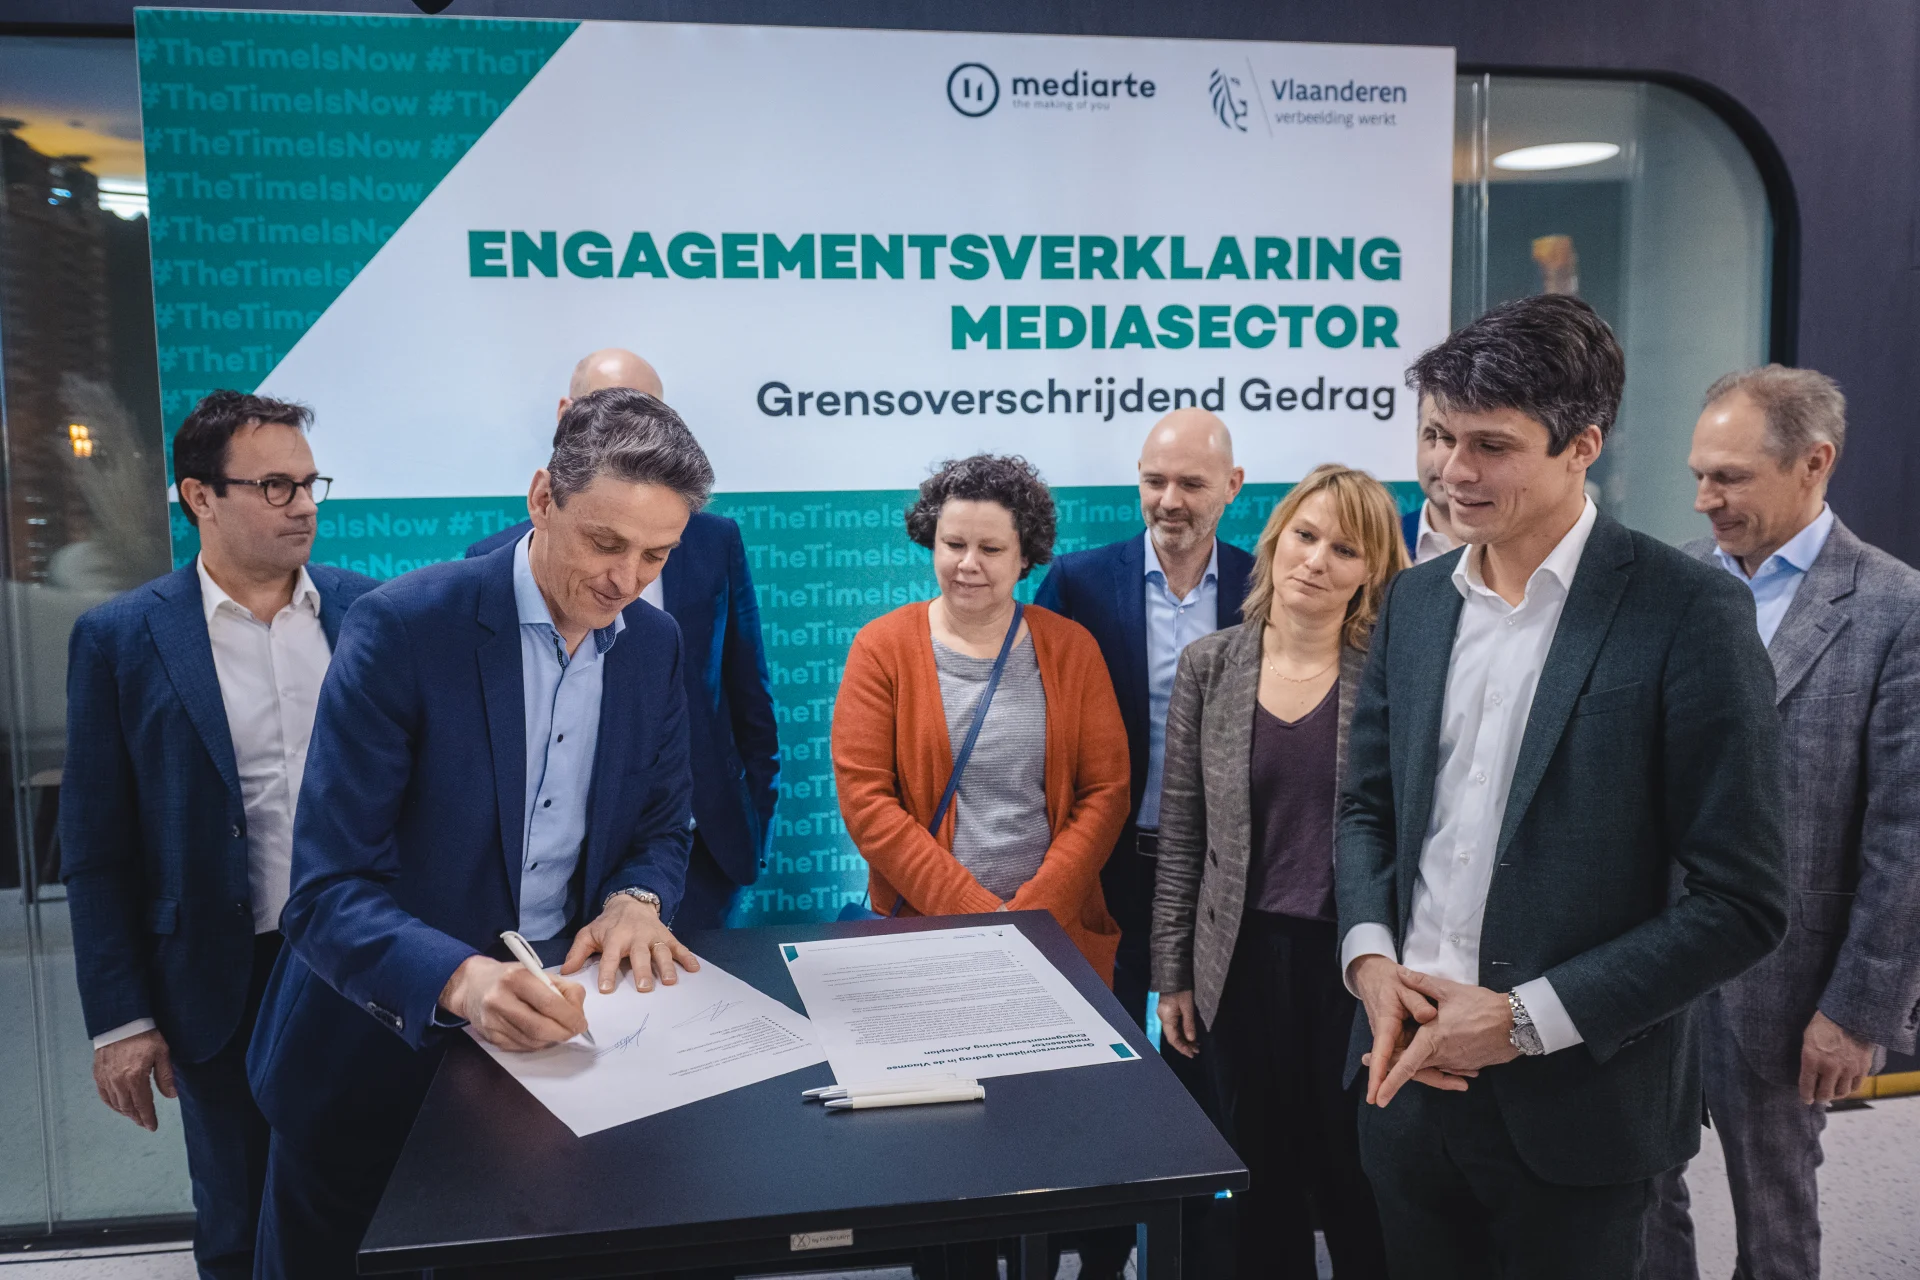 Kris Vervaet, CEO DPG Media België, signs the sector charter